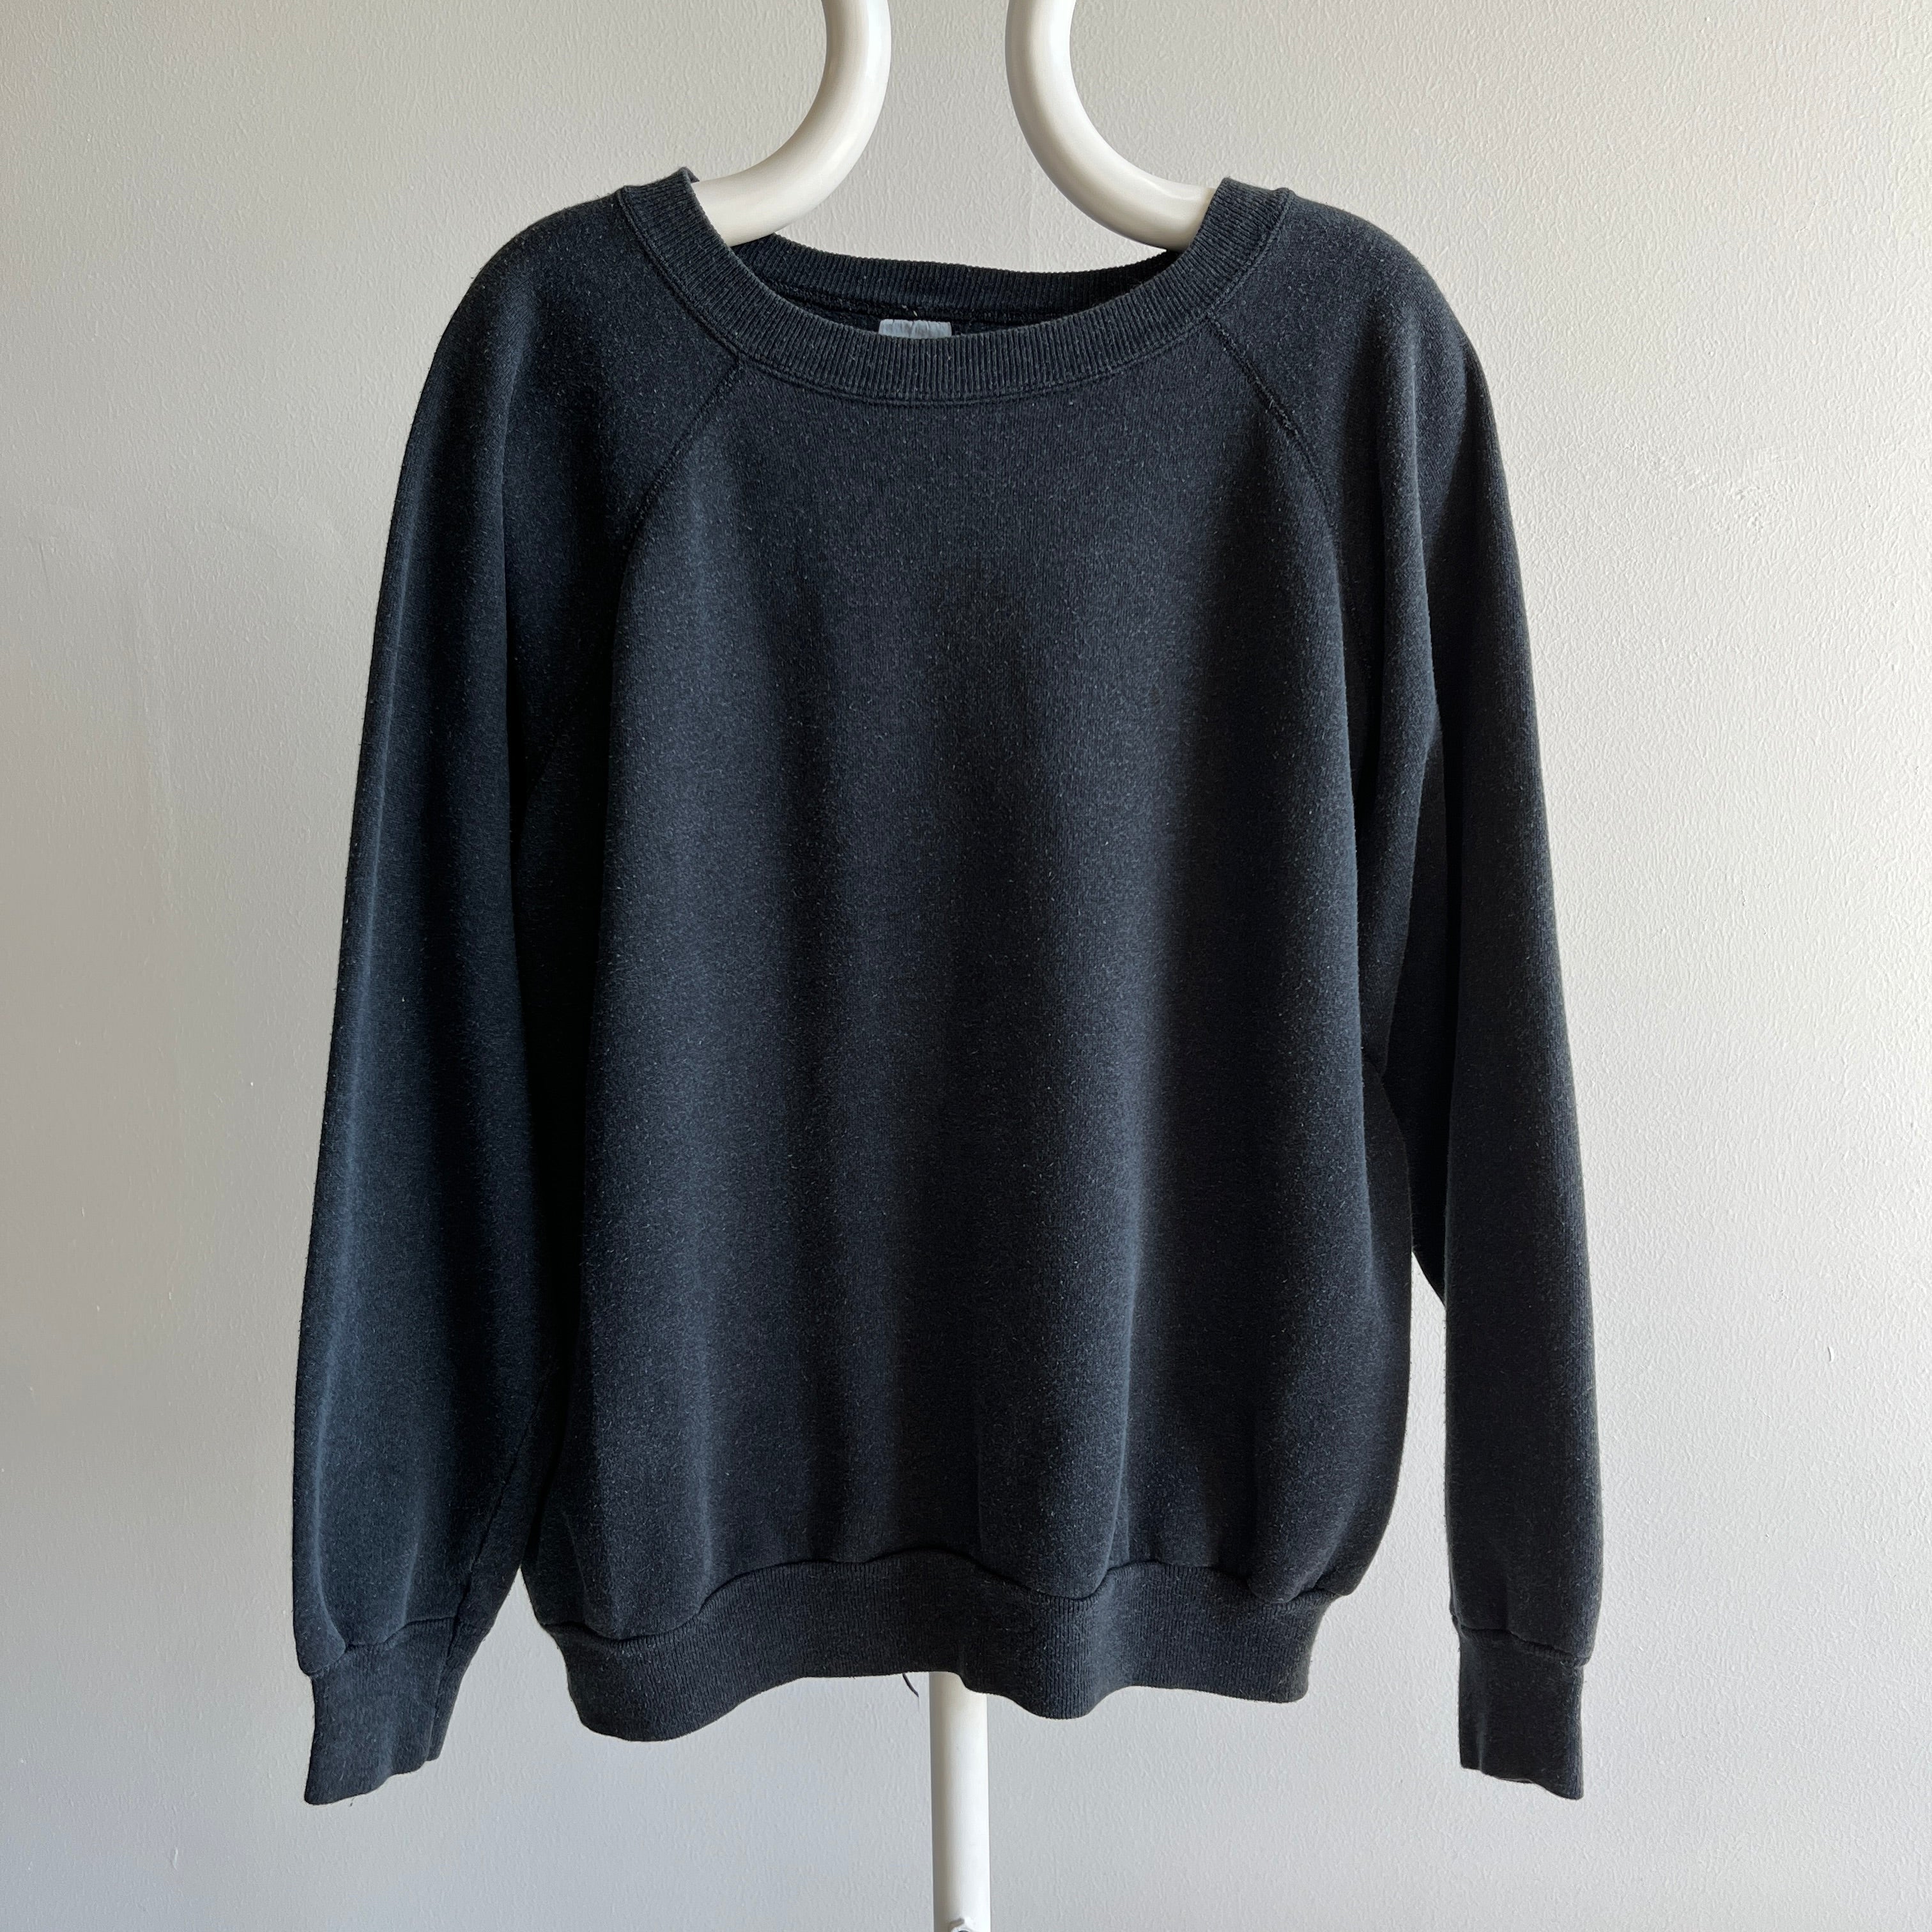 1980s Faded Black to Gray Slouchy Delight of a Raglan Sweatshirt